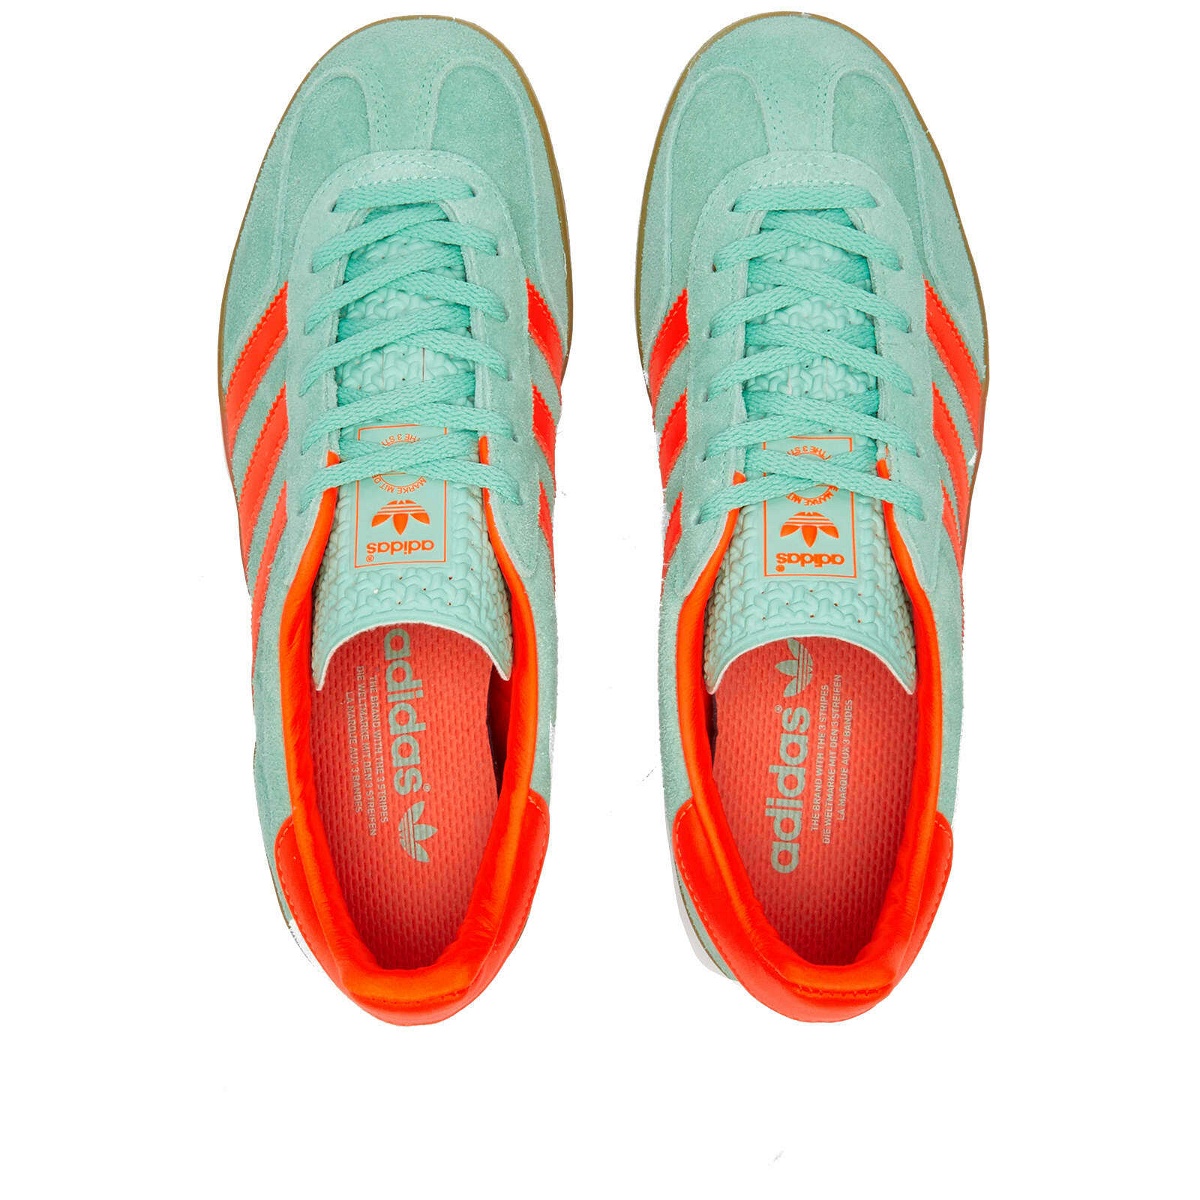 Pulse Gazelle Adidas W Mint/Orange adidas Sneakers Indoor in